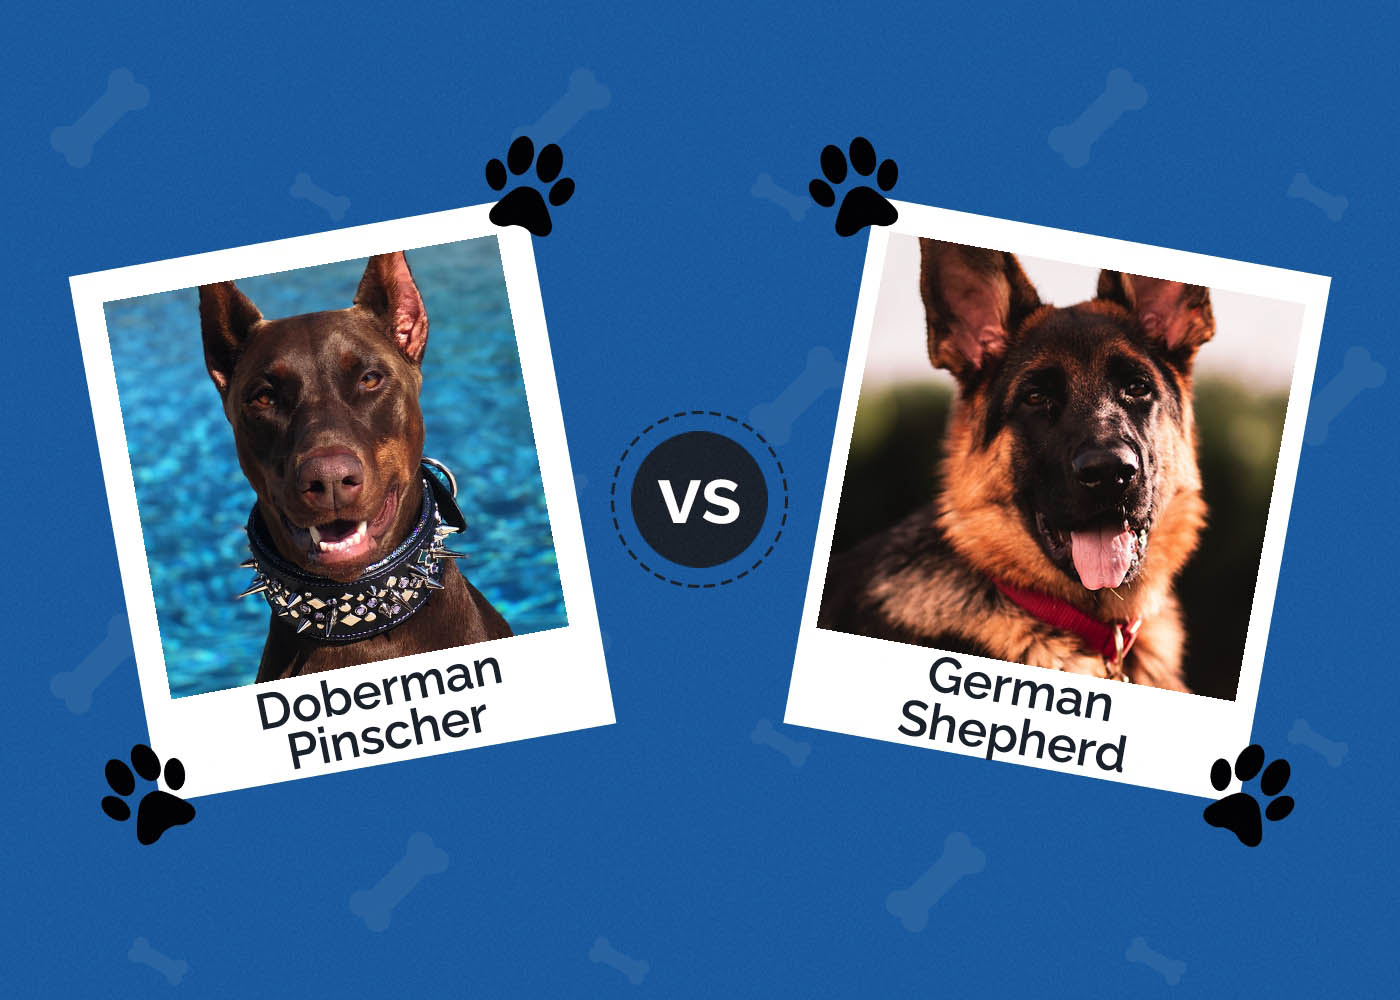 Doberman Pinscher vs German Shepherd